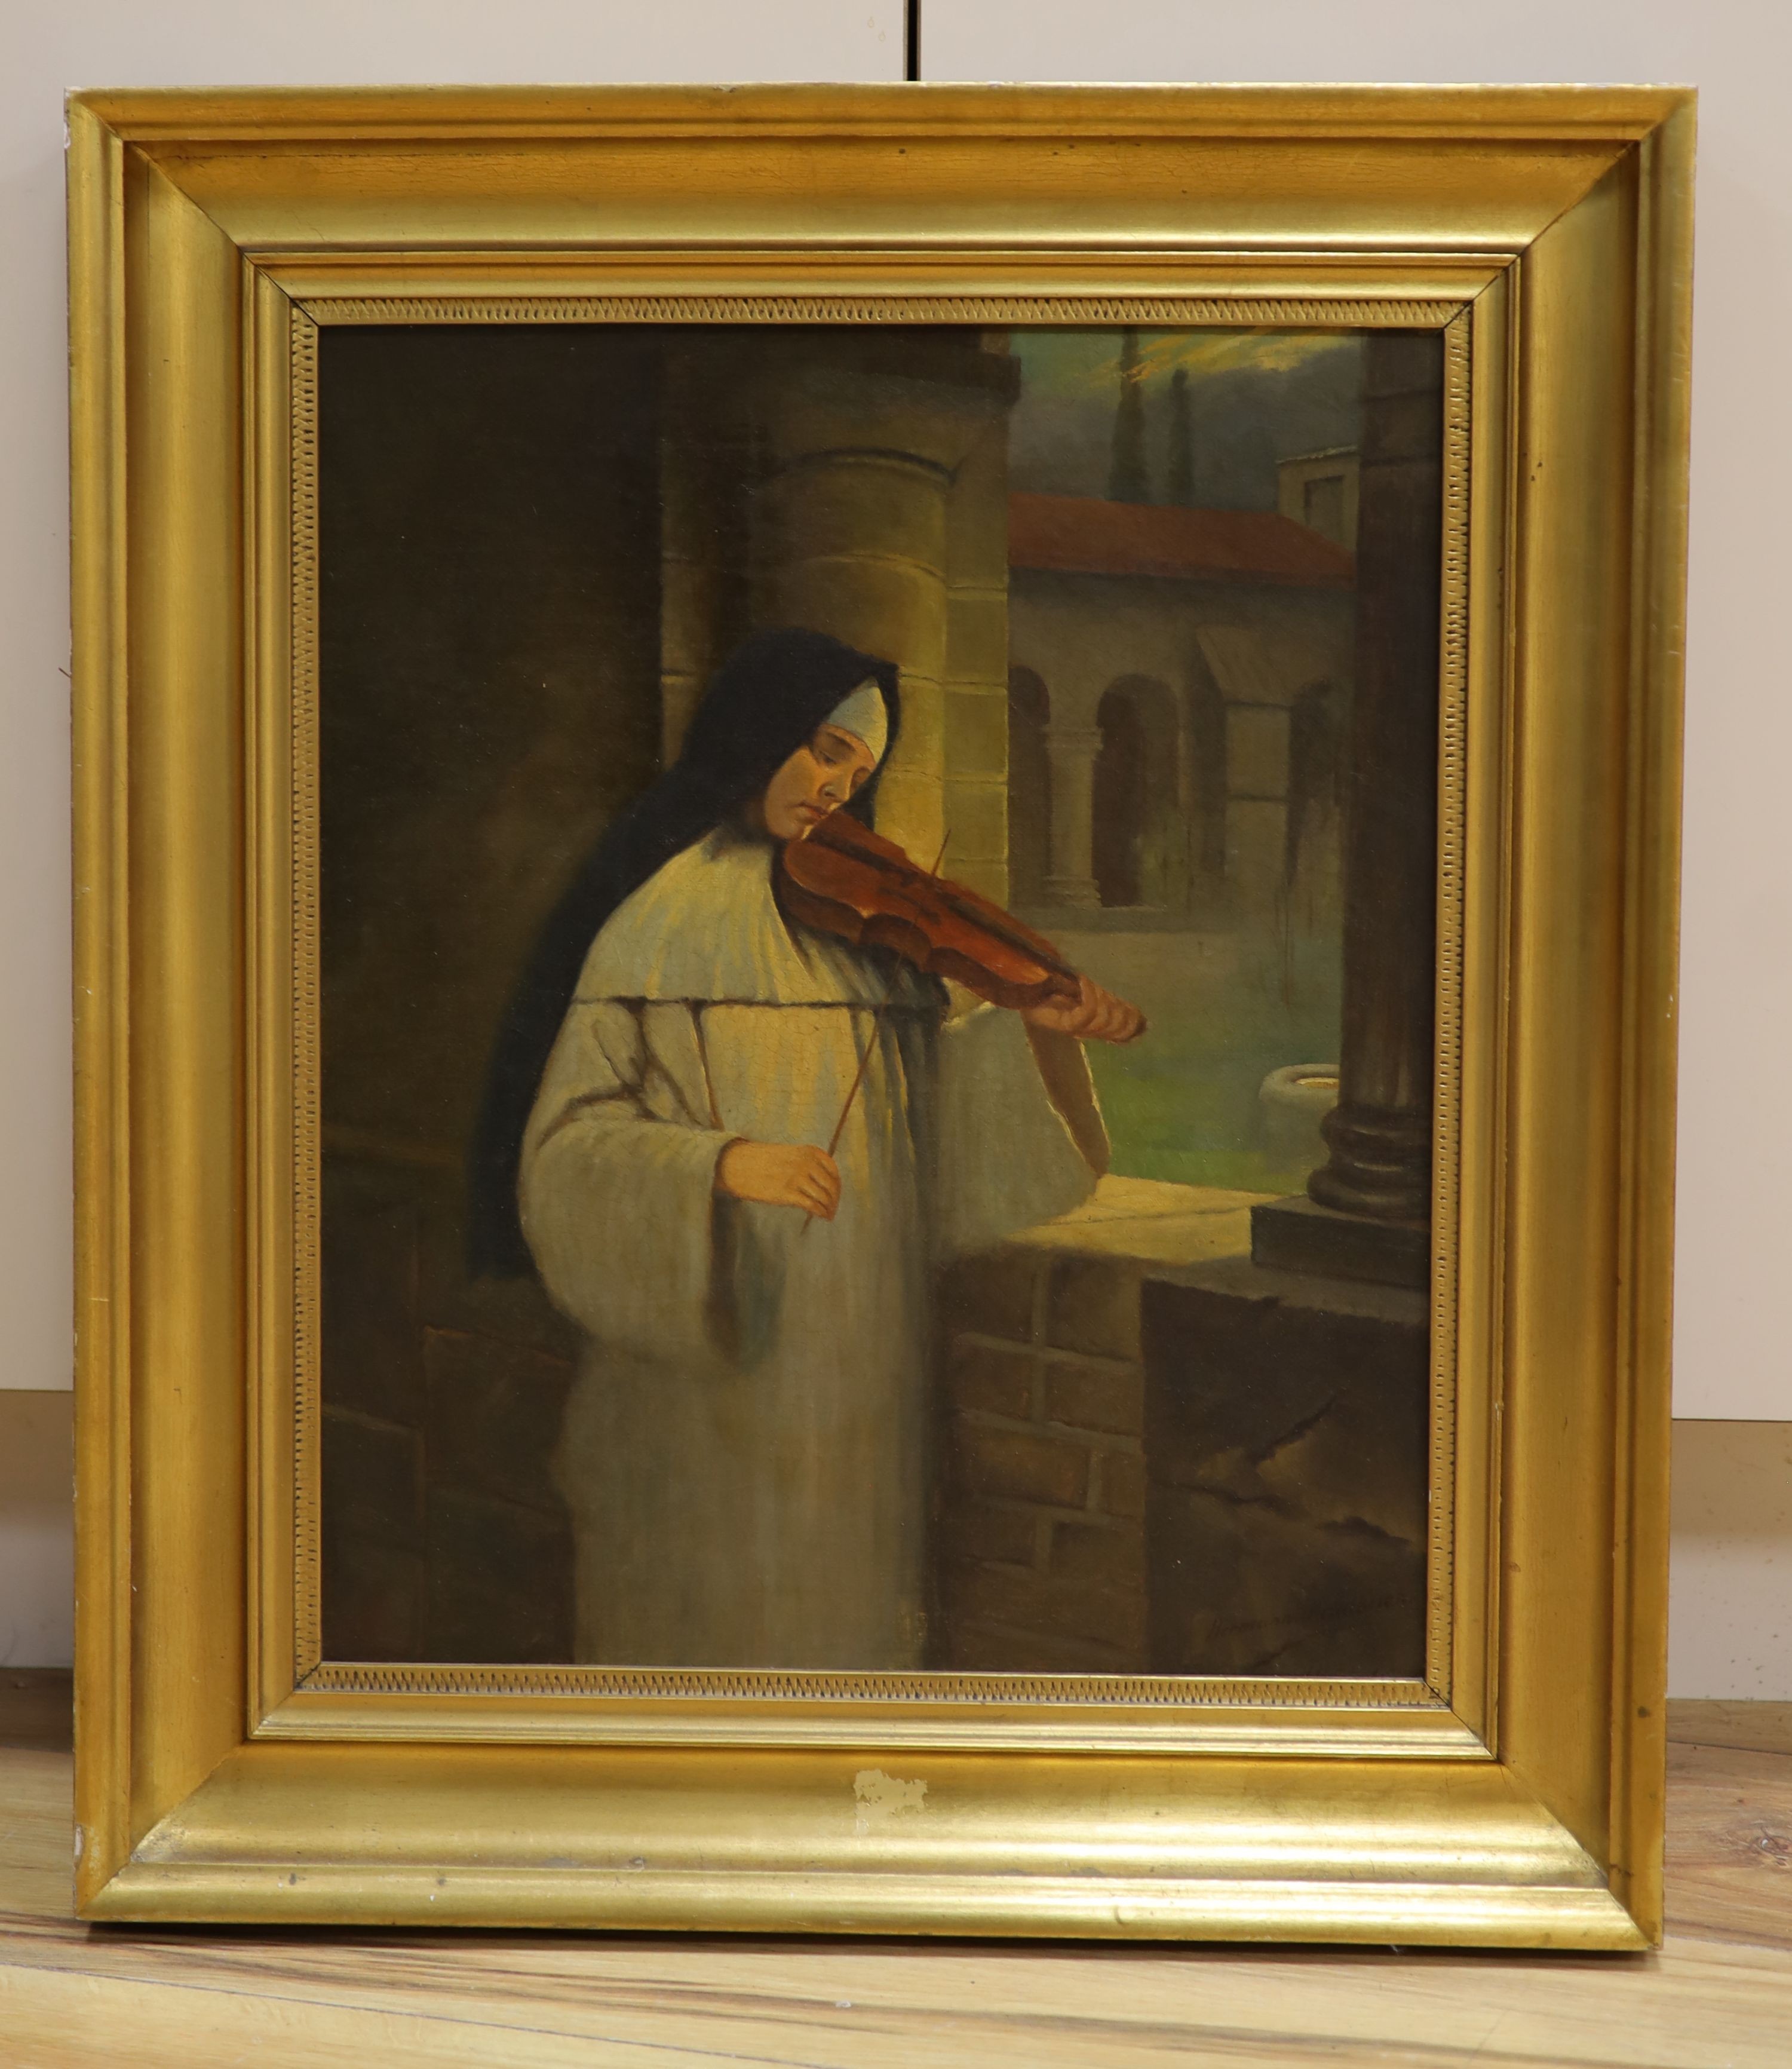 Hermann Kaulbach (1846-1909), oil on canvas, Nun playing a violin, signed, 46 x 38cm